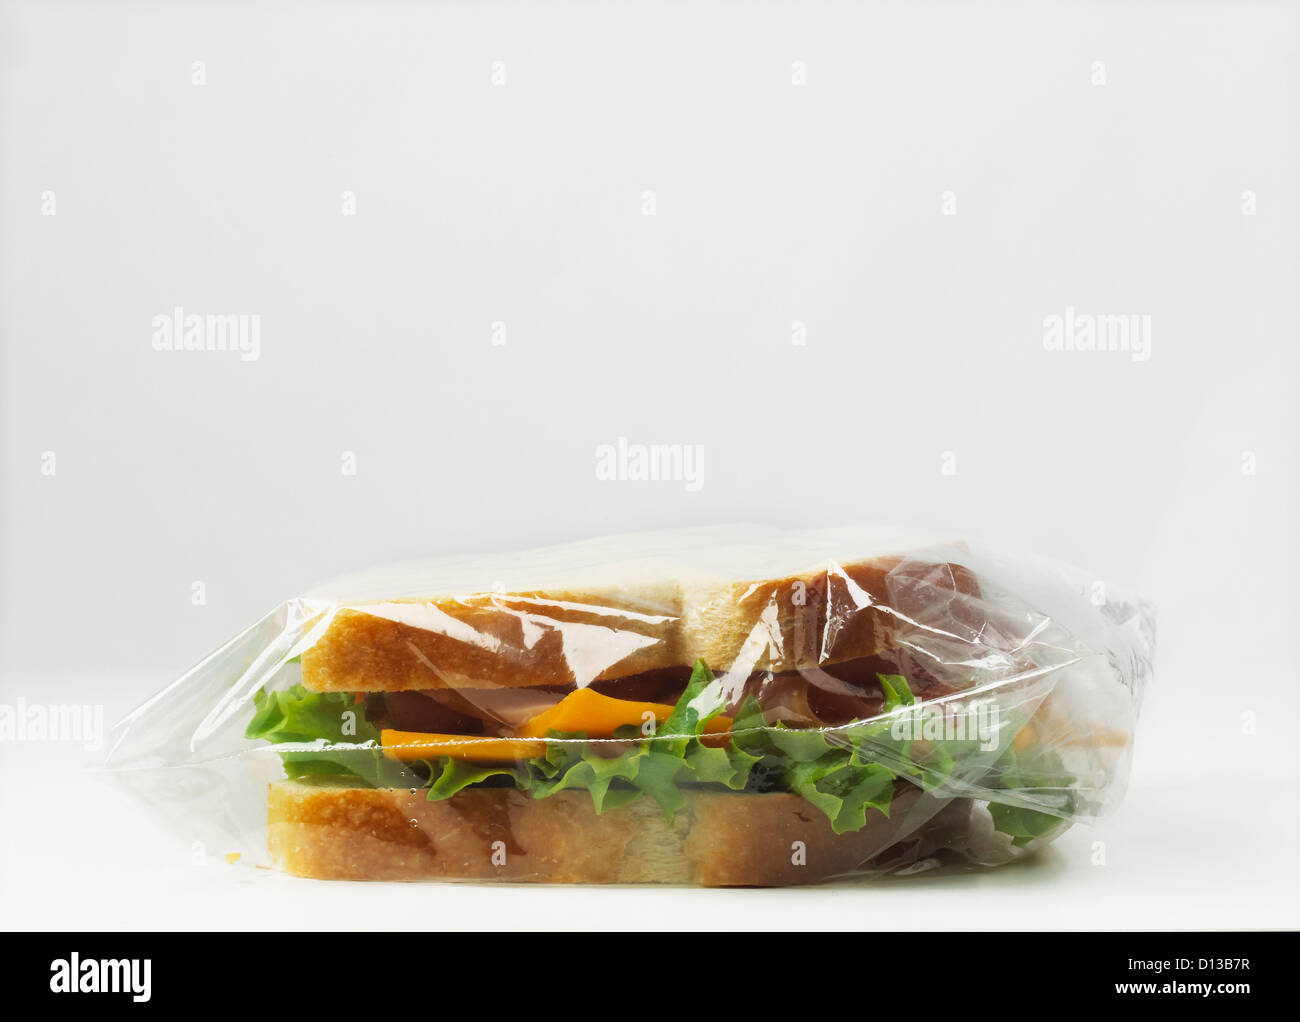 https://c8.alamy.com/comp/D13B7R/sandwich-in-a-plastic-bag-D13B7R.jpg